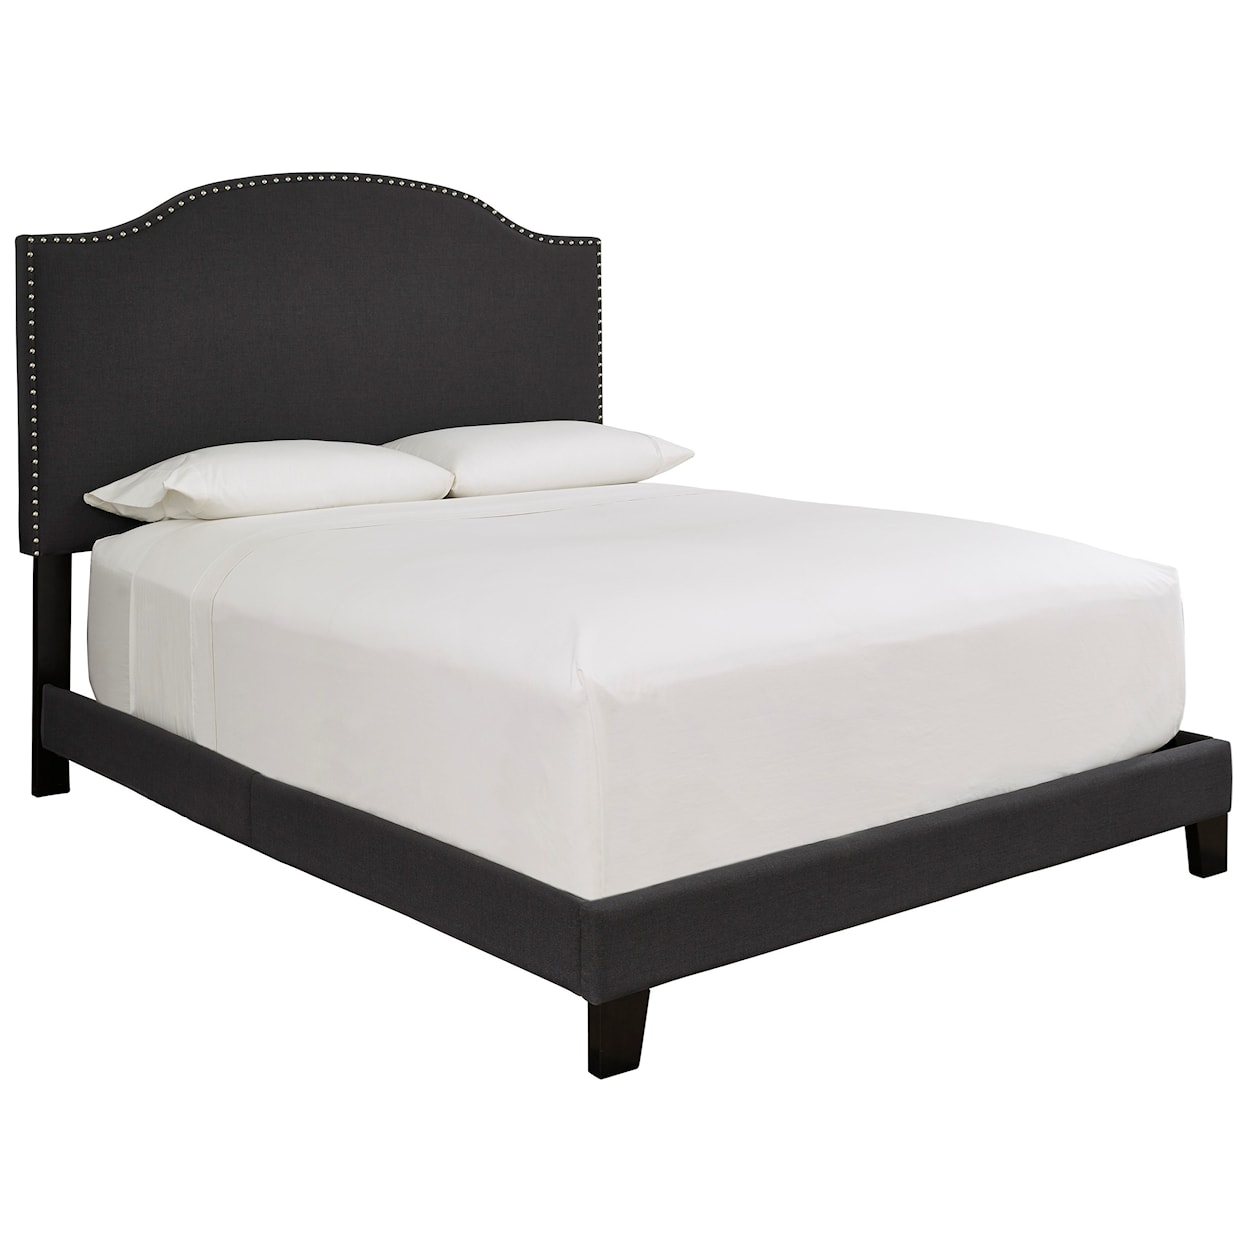 StyleLine Adelloni King Upholstered Bed